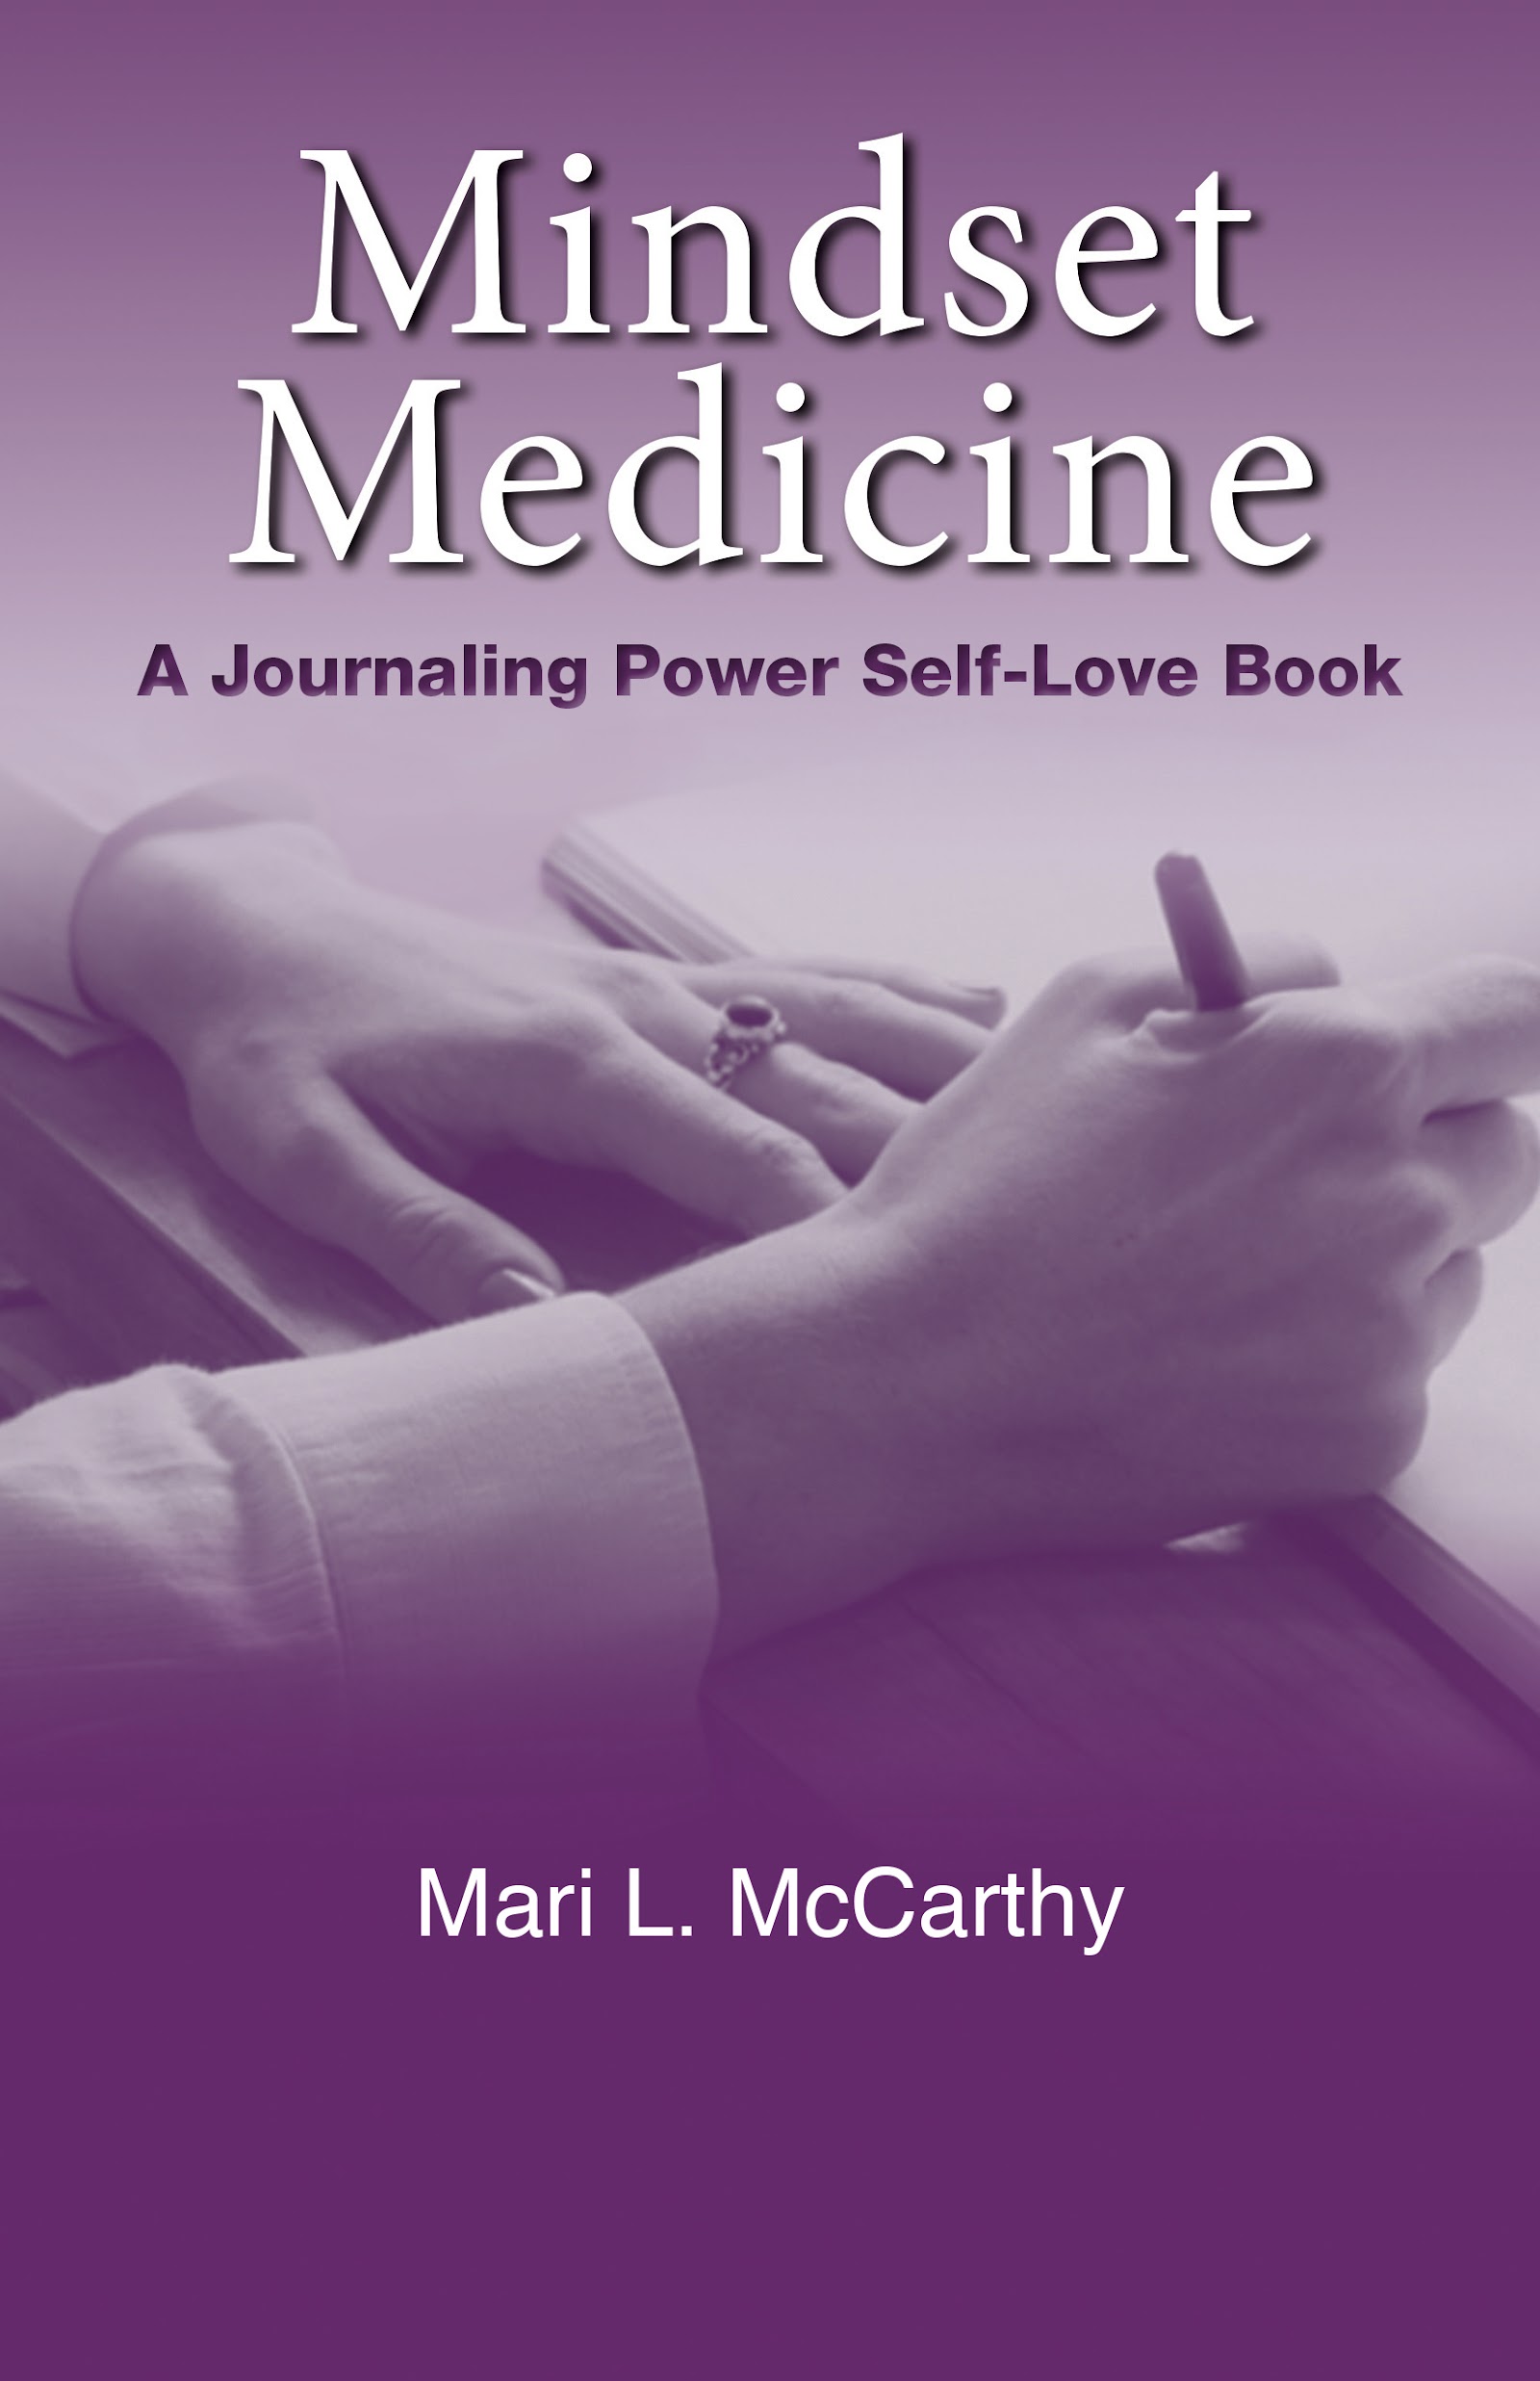 Mari L. McCarthy's book Mindset Medicine